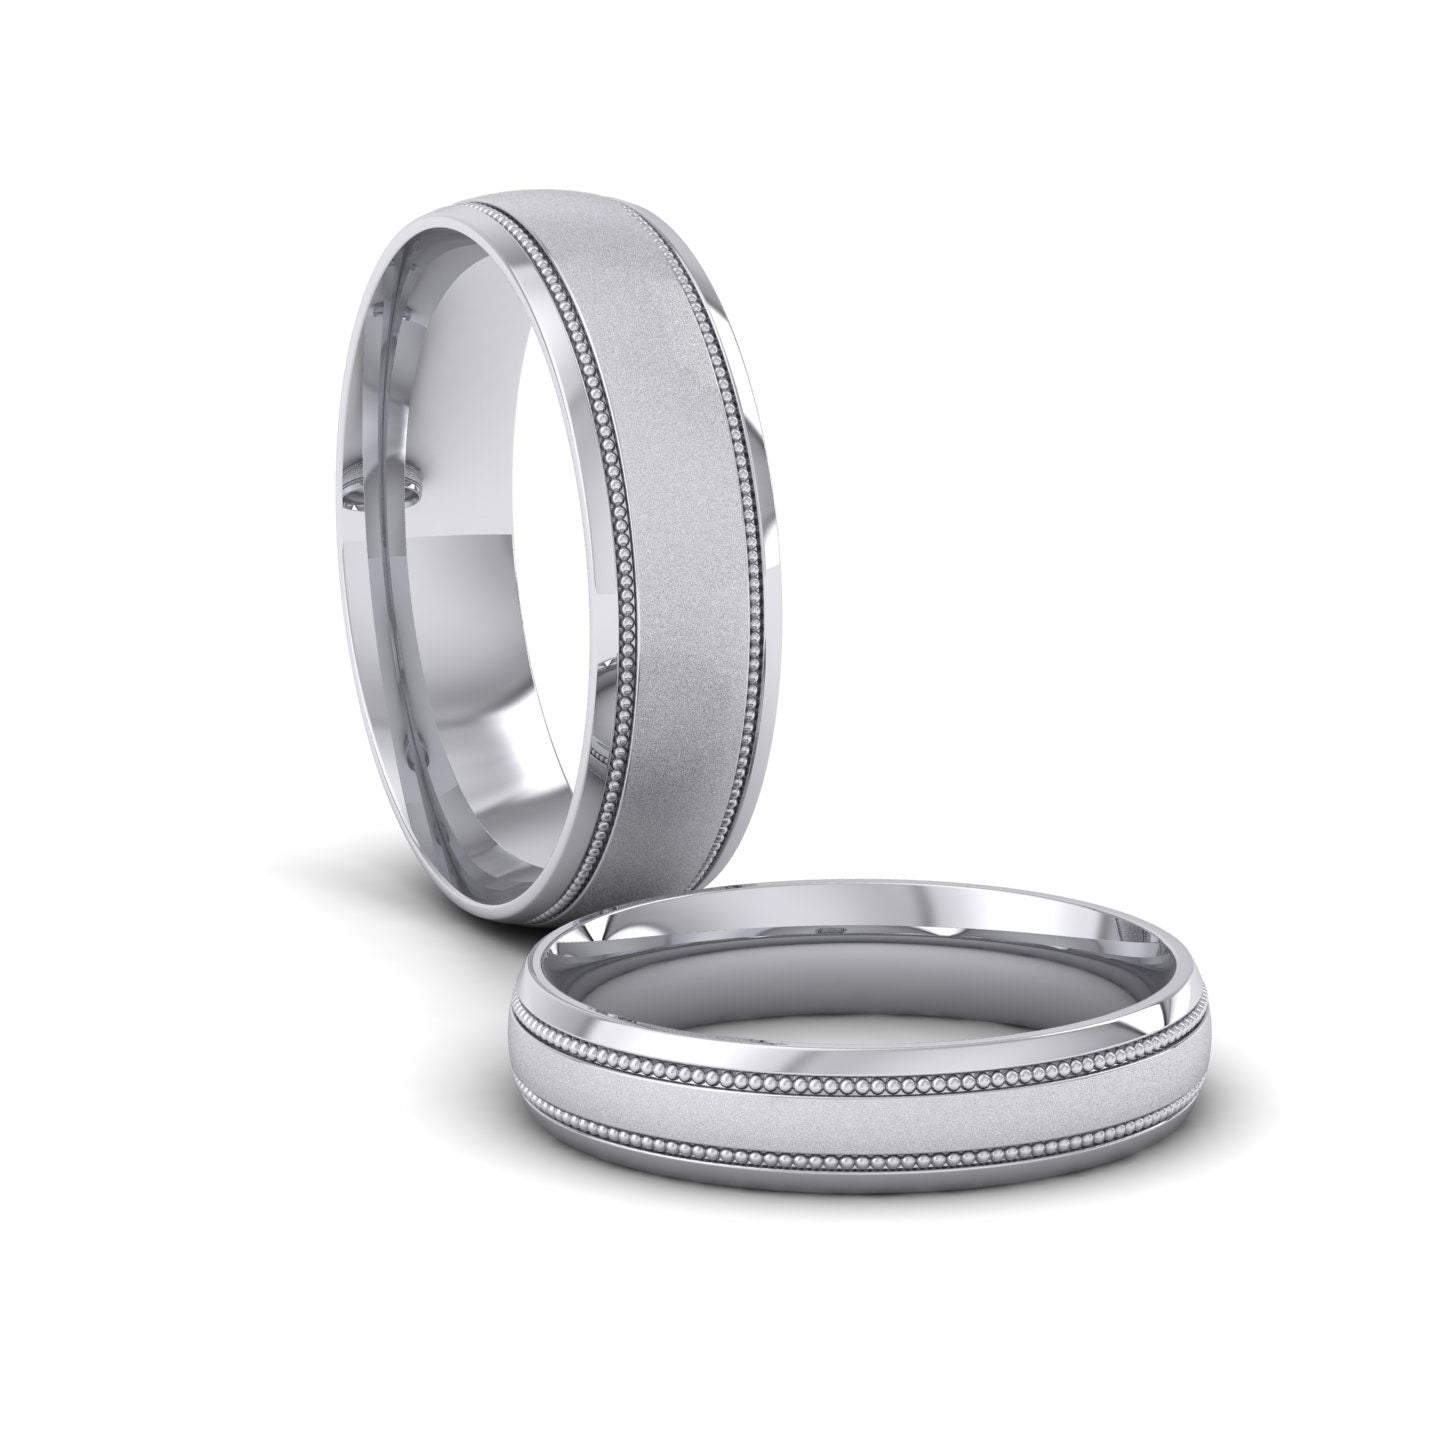 Millgrain And Contrasting Matt And Shiny Finish 950 Palladium 4mm Wedding Ring